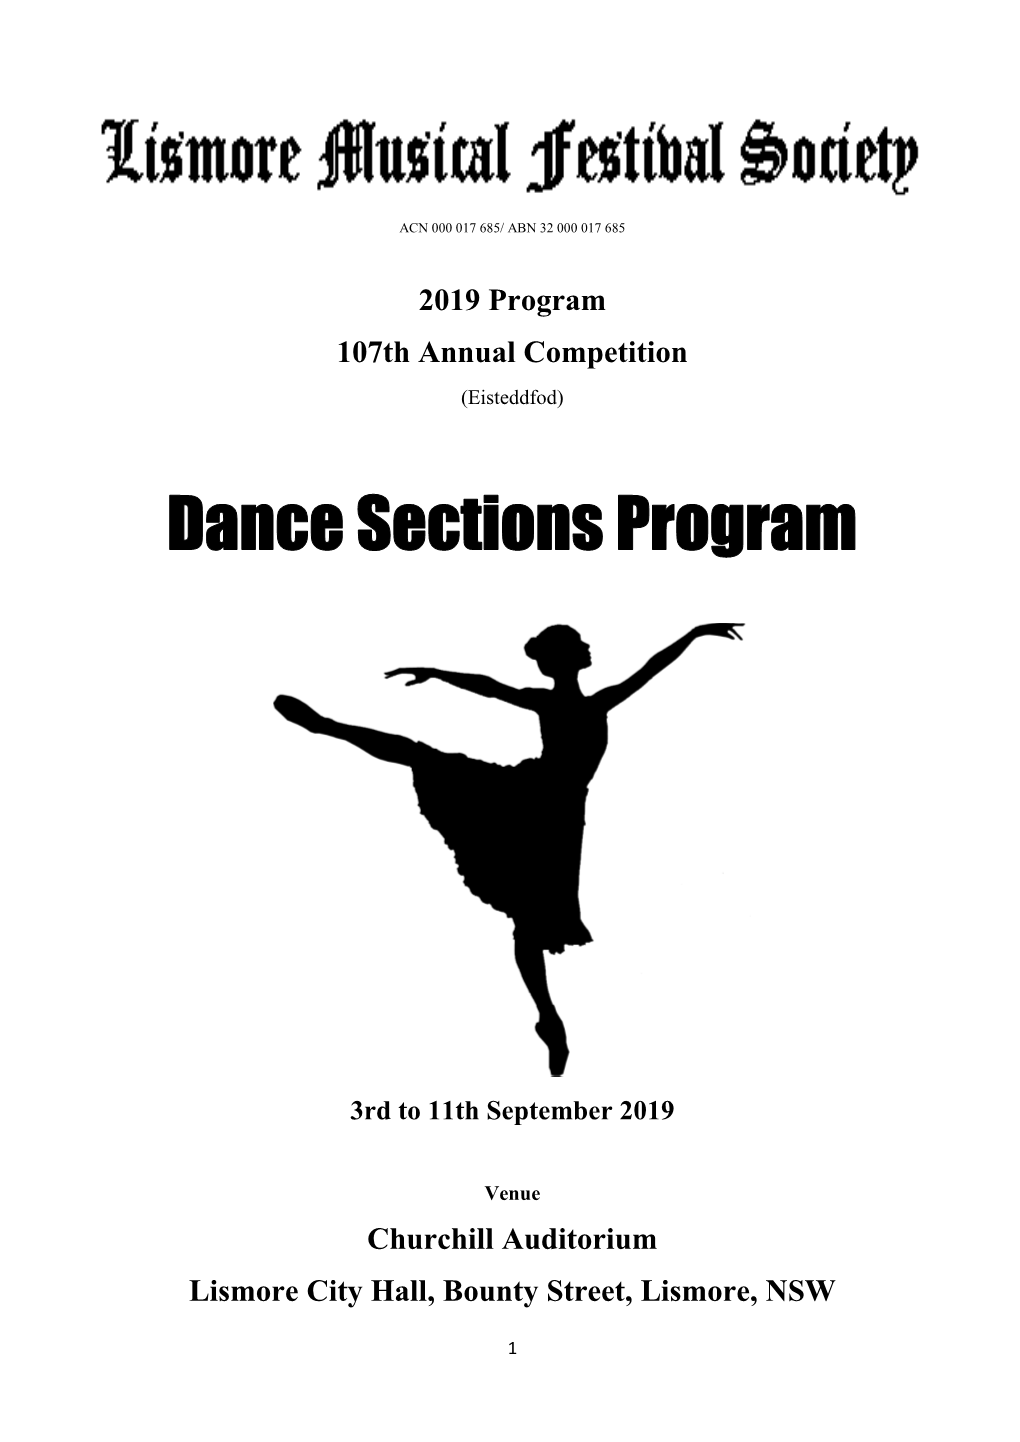 Dance Sections Program